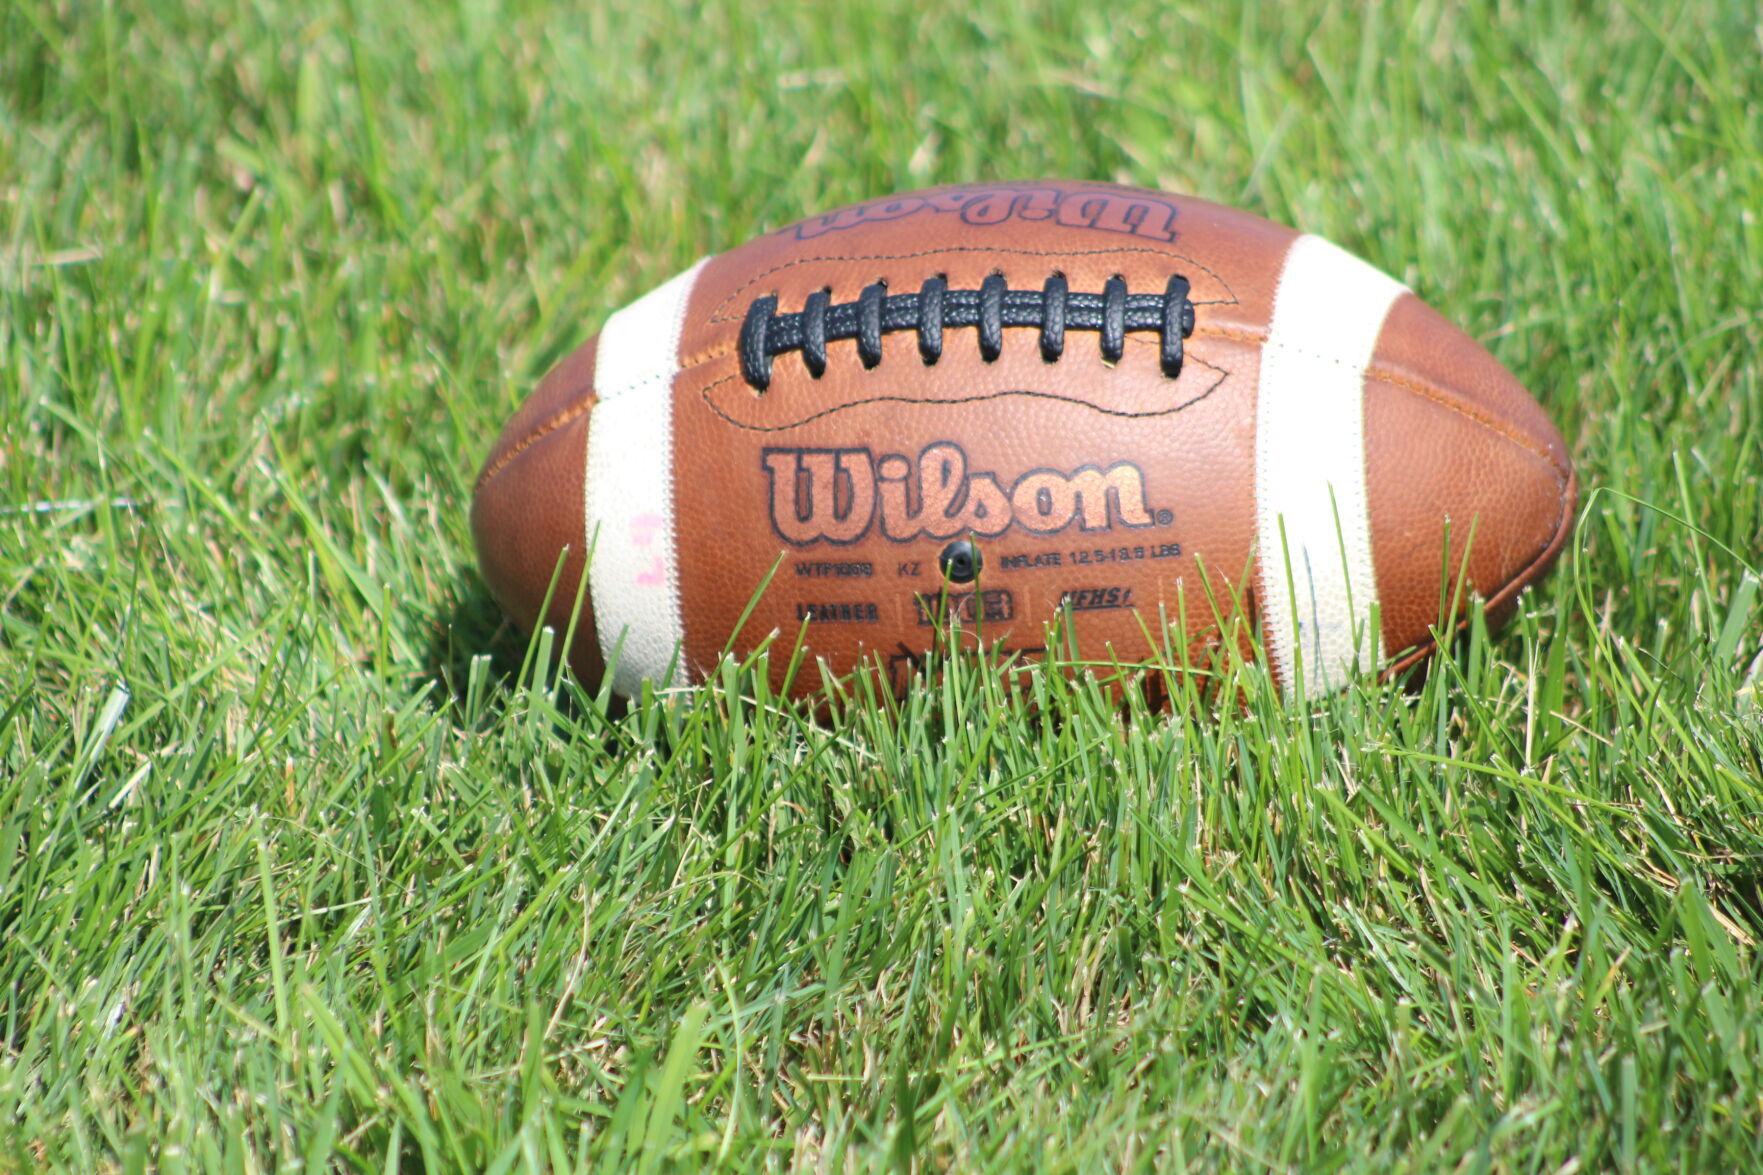 Kimberly tops latest Wisconsin high school football rankings